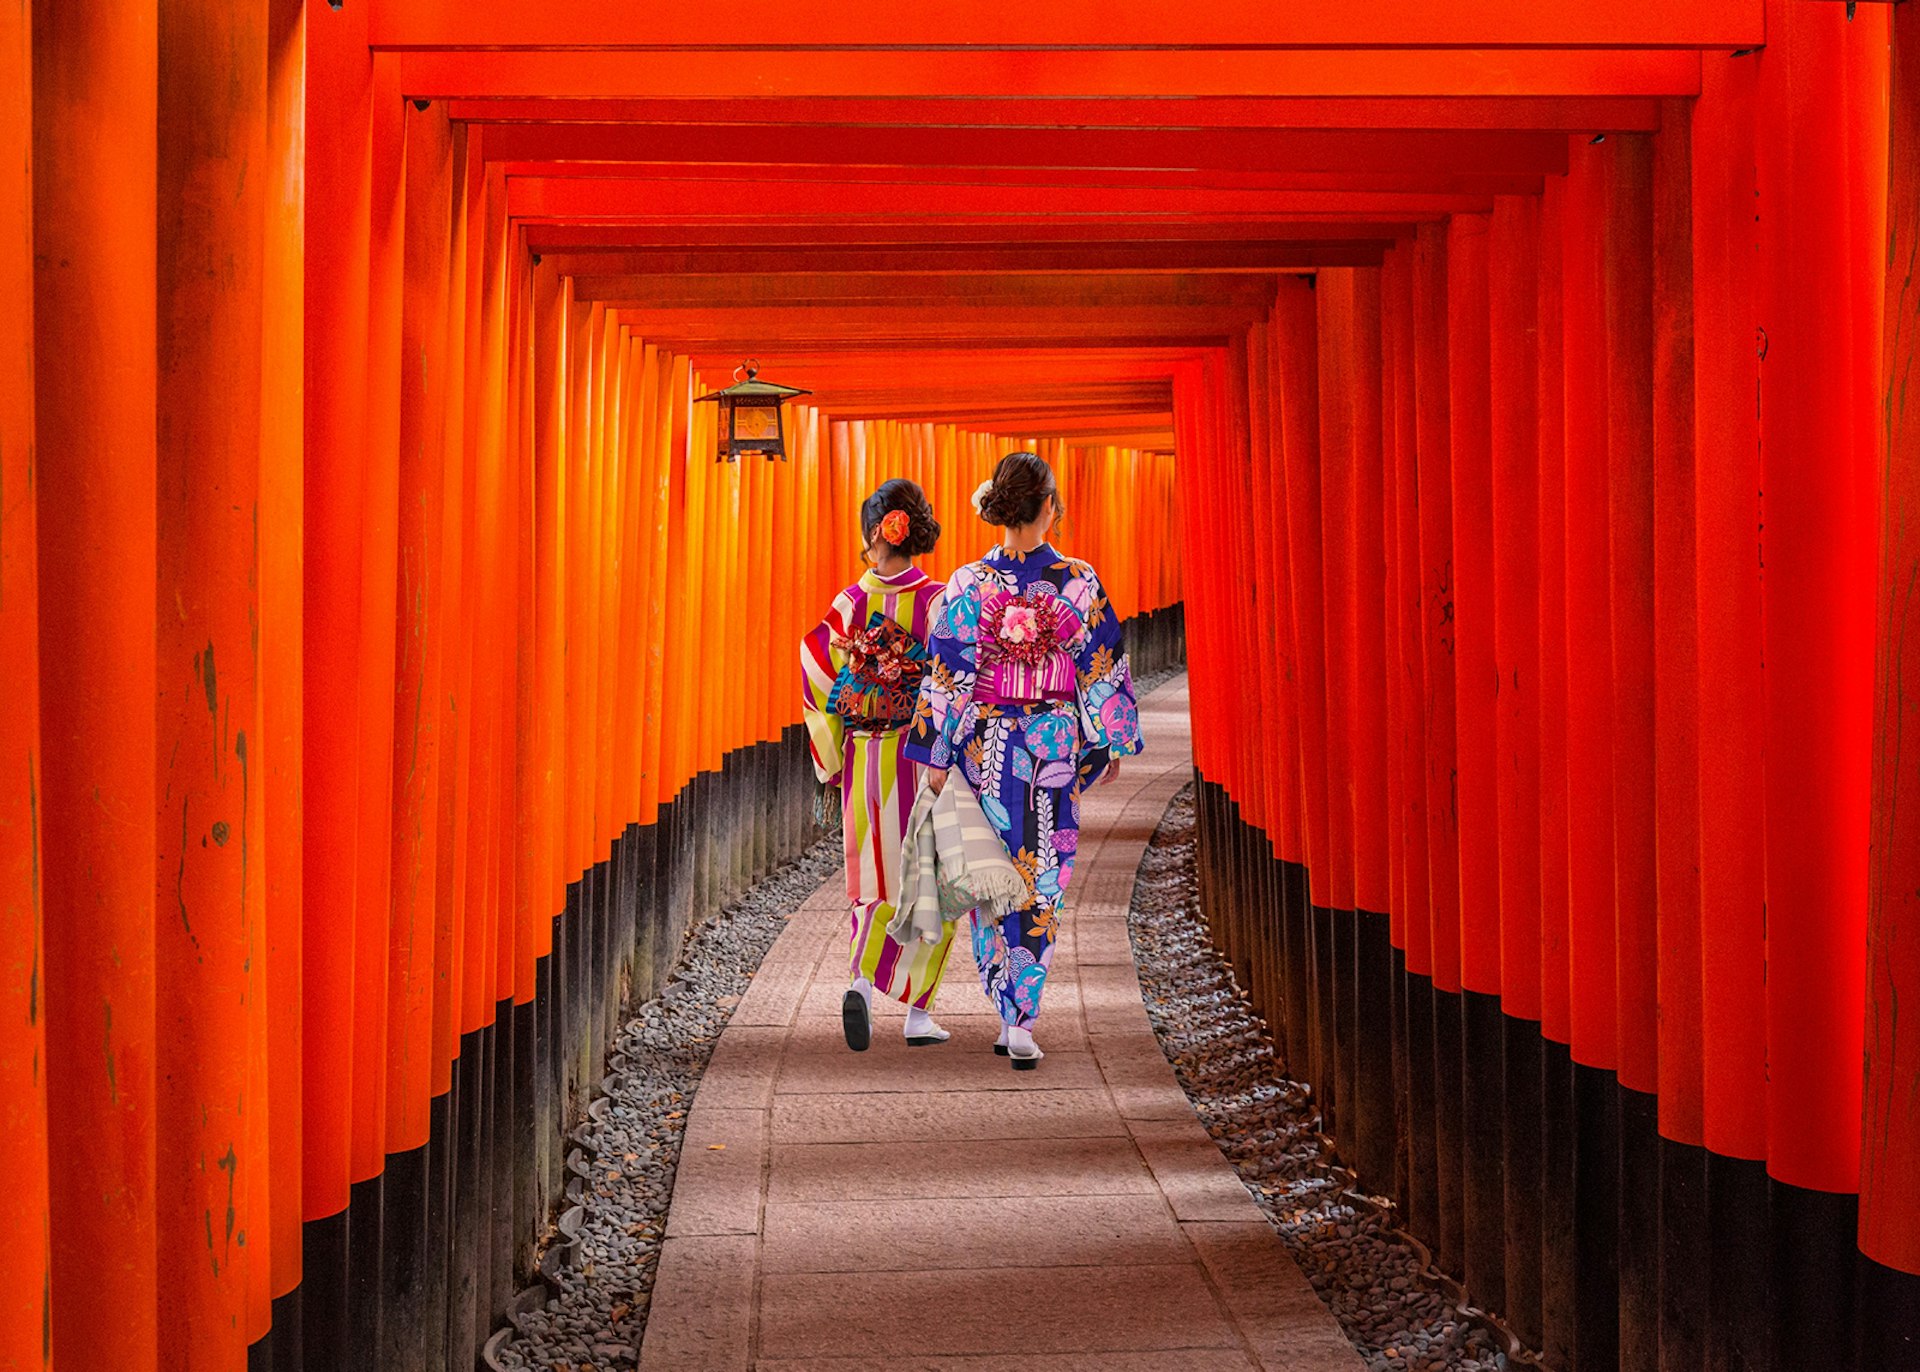 Japanese women in kimonos walking at the Fushimi Inari Shrine in Kyoto, Japan © Patryk Kosmider / Shutterstock